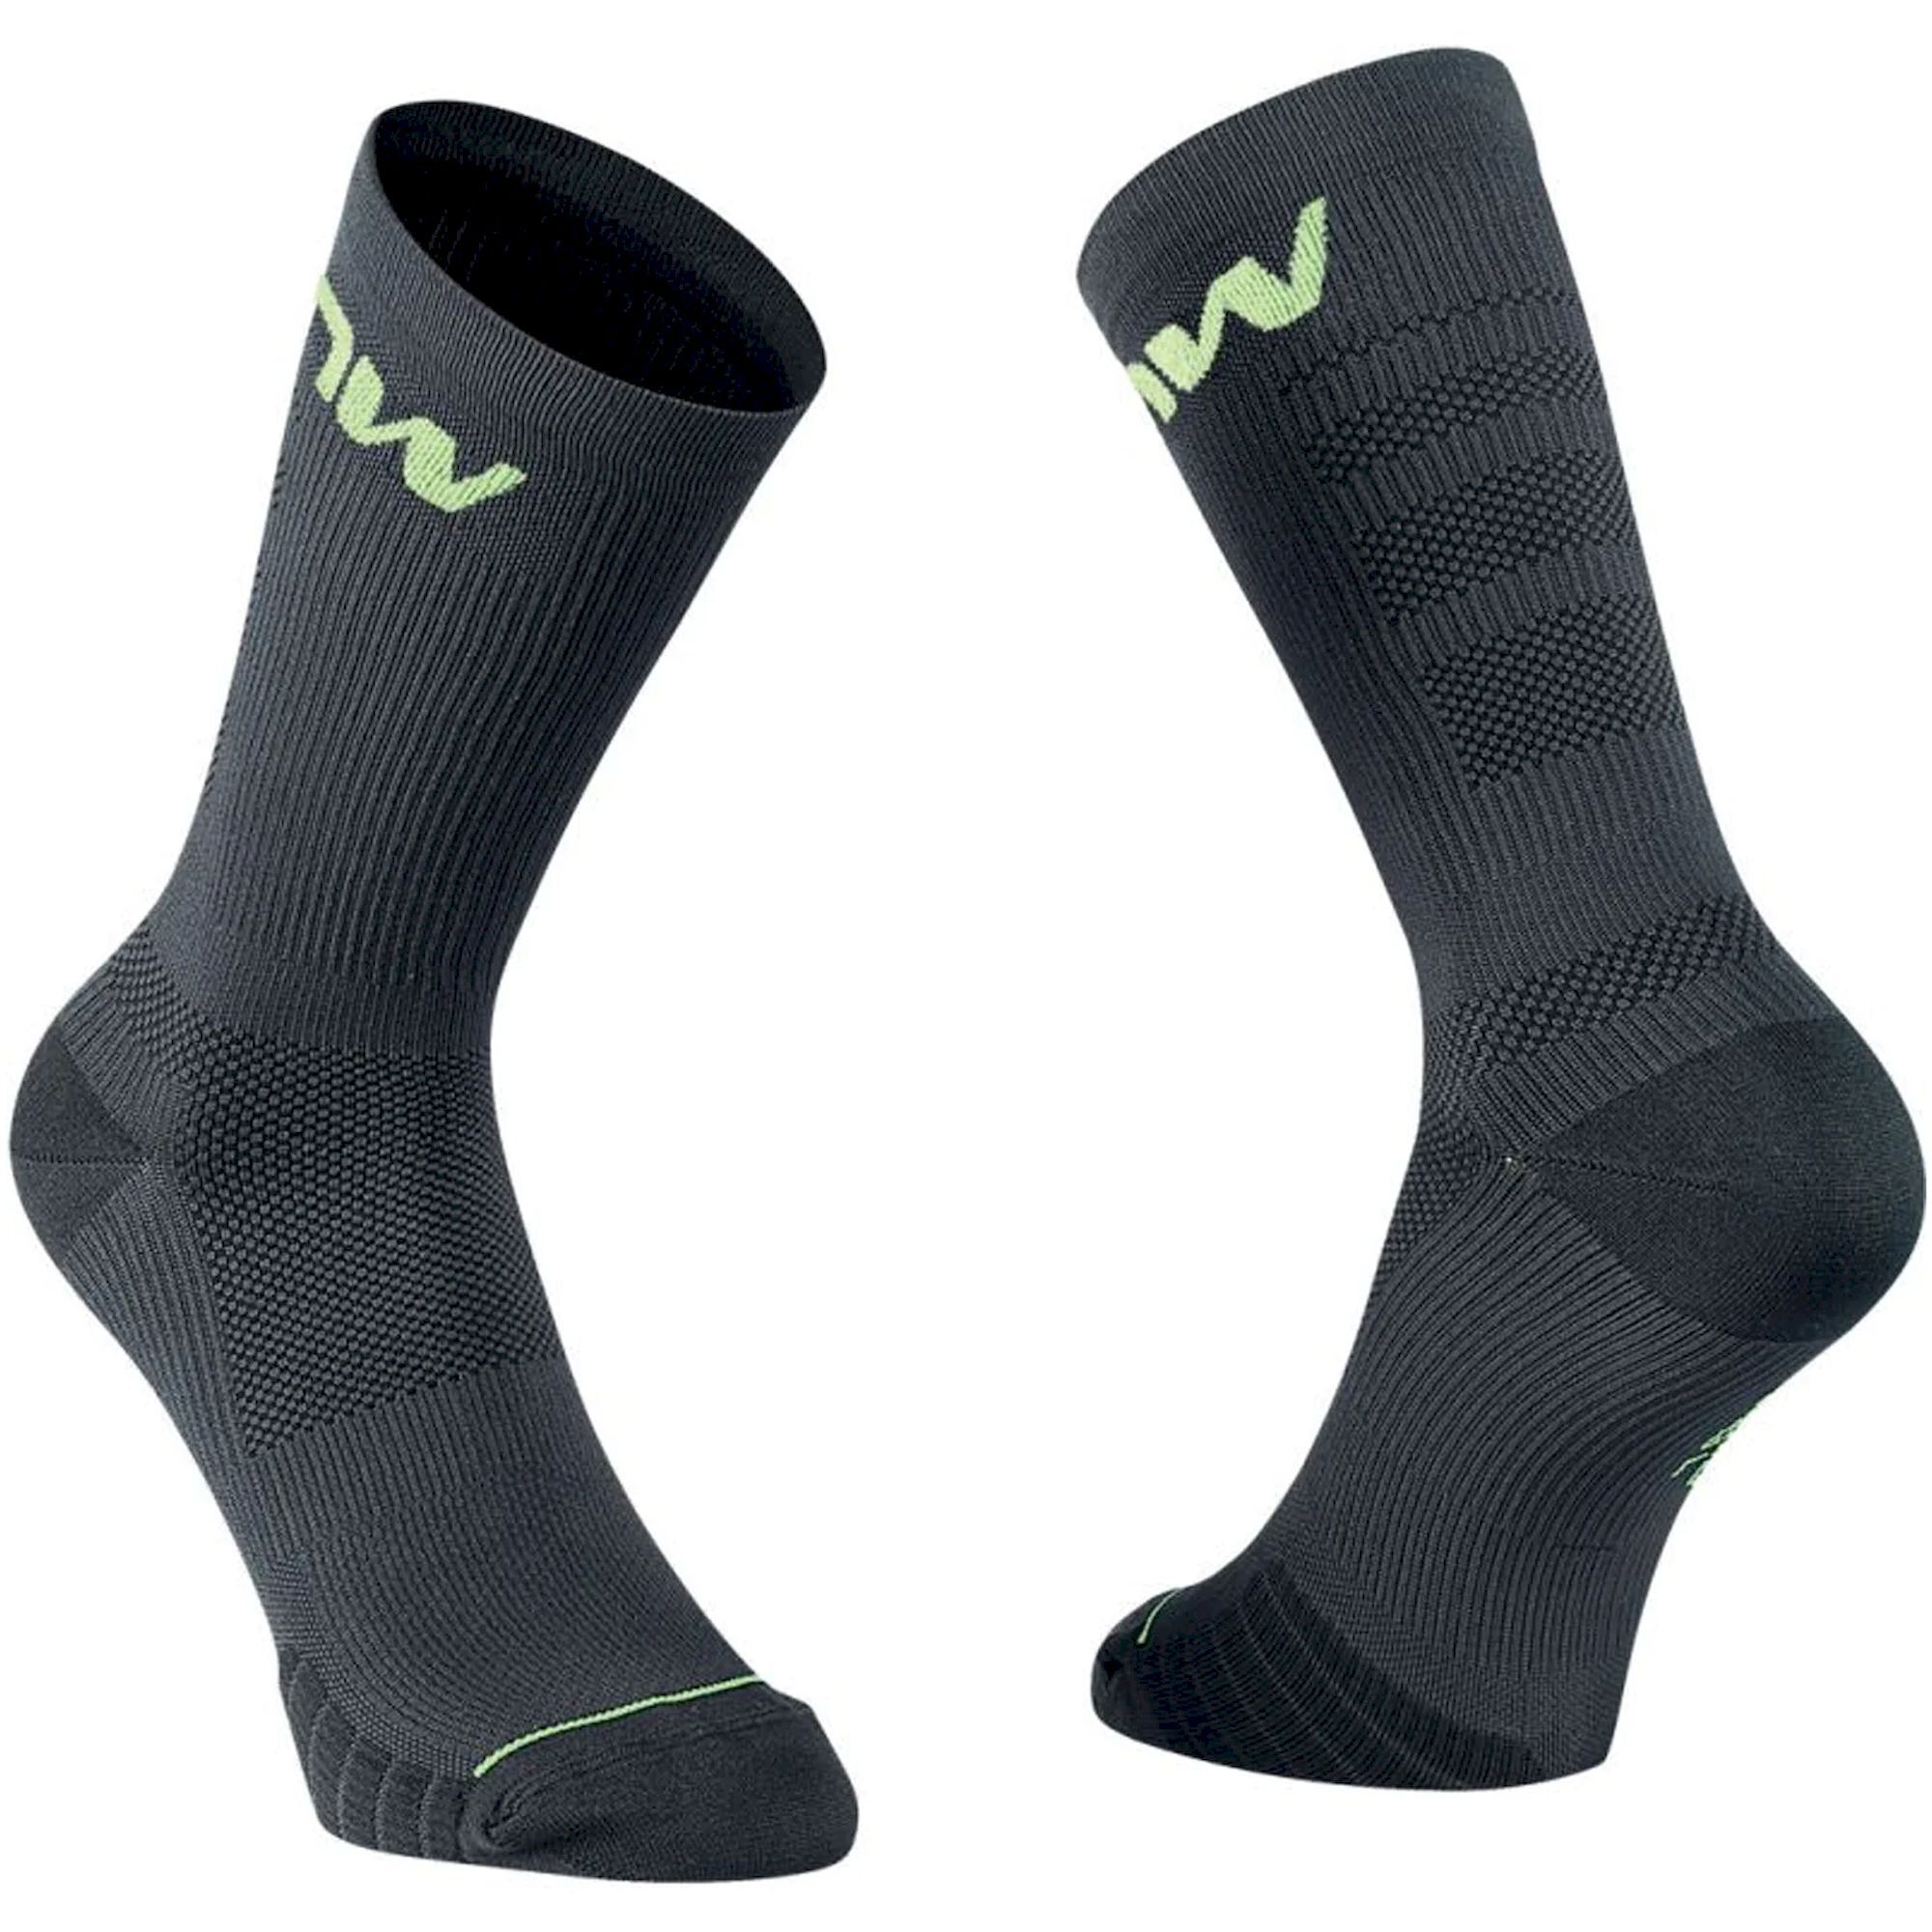 Northwave Extreme Pro Sock - Cycling socks - Men's